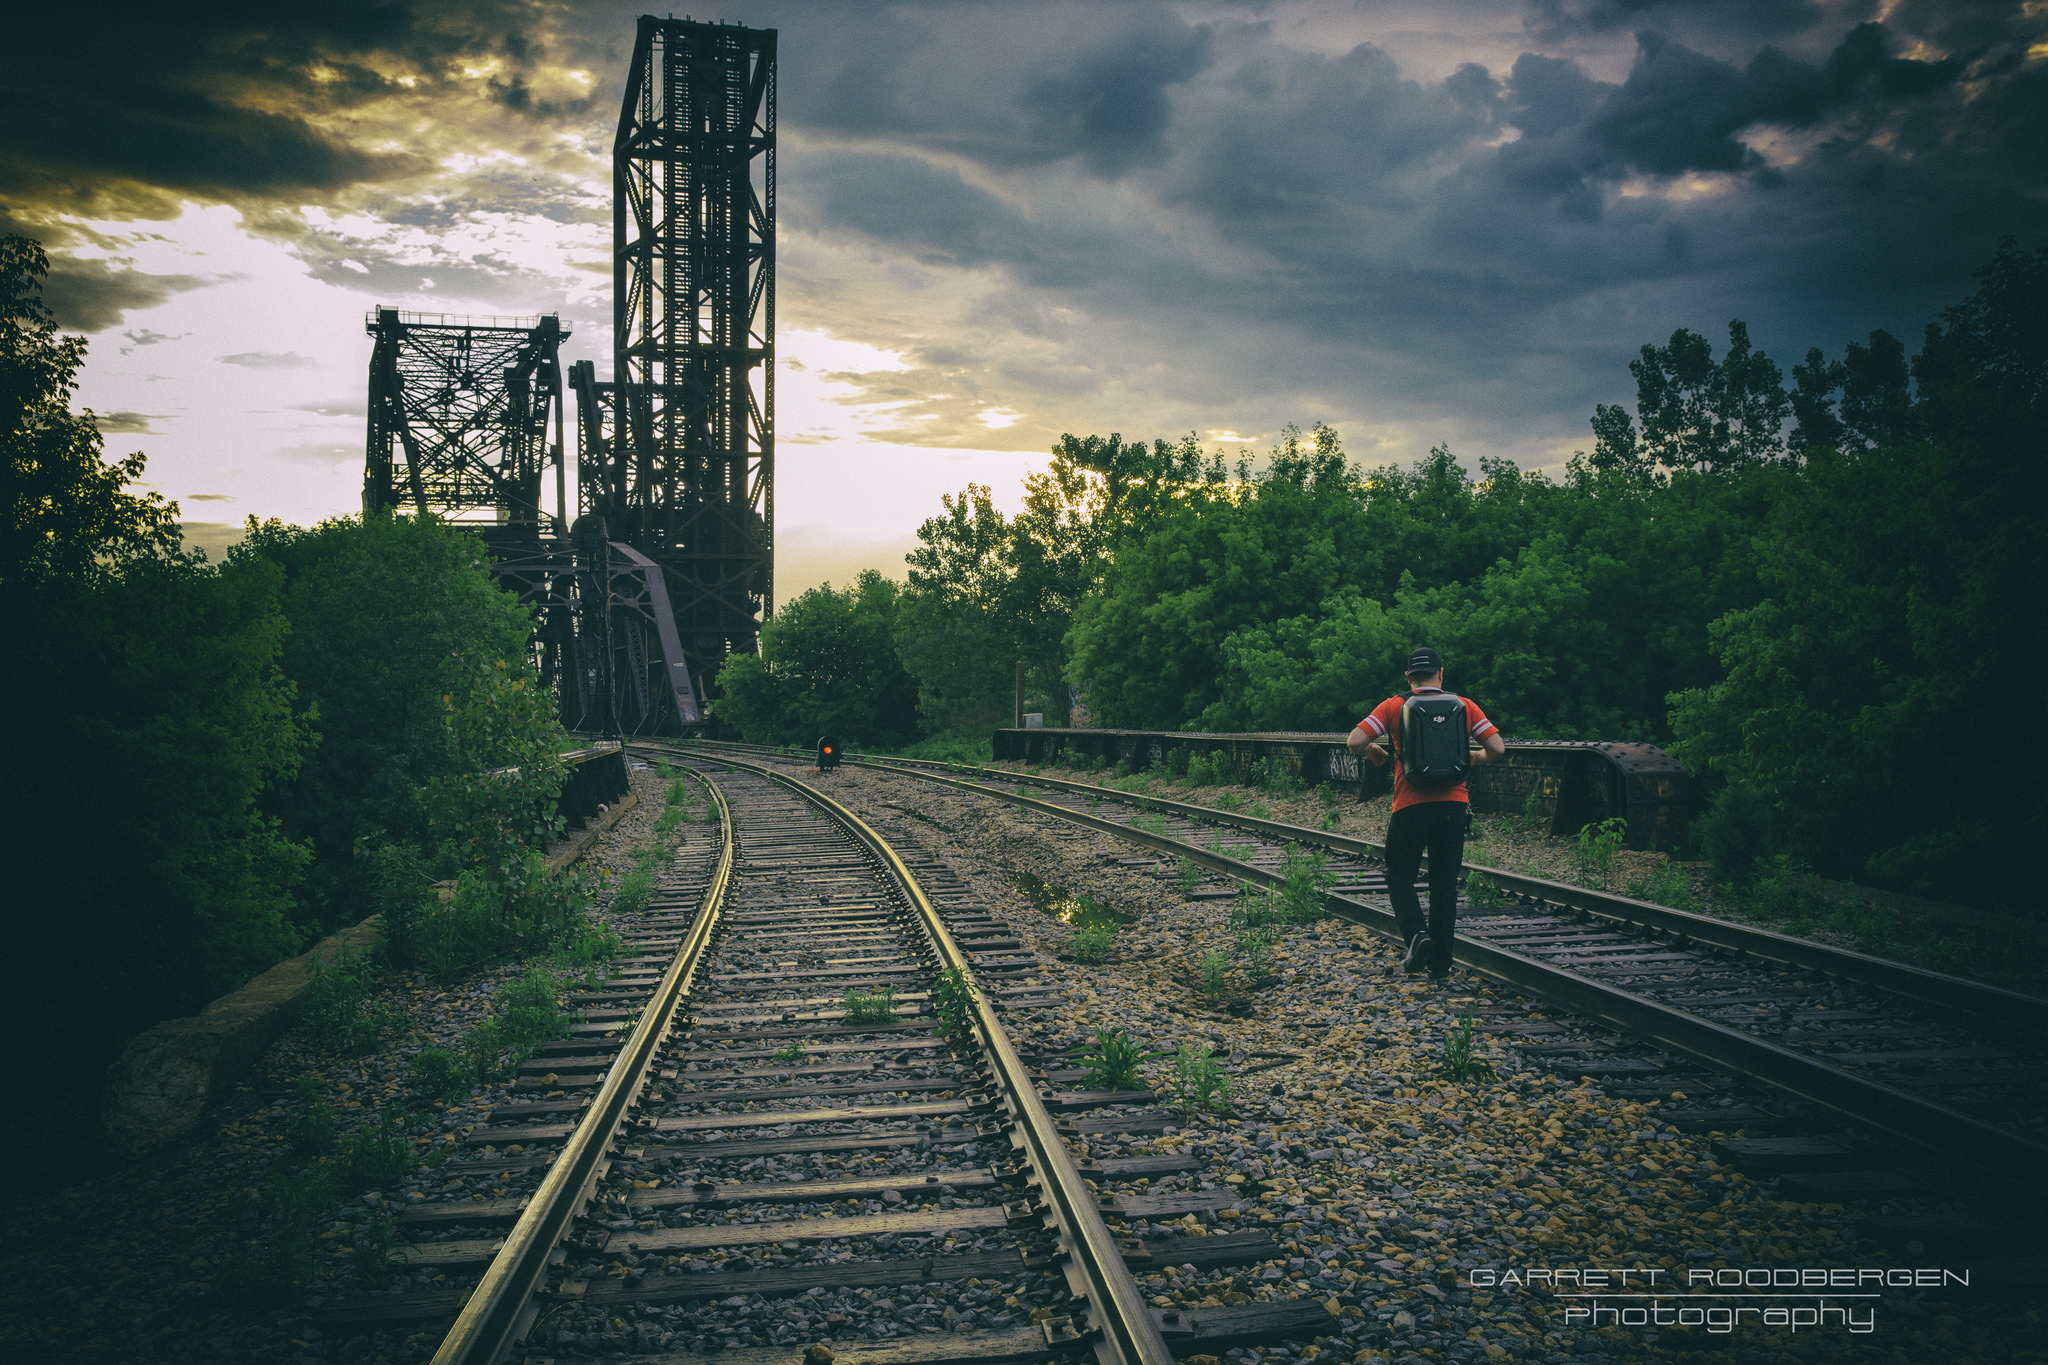 Walk #photographyislife #photography #canon #chicago #citylife #sunset #life #train #tracks #railroad #walk #bridge #sky #lonely #walkingdead #homage #apocalypse #after #empty #world #light